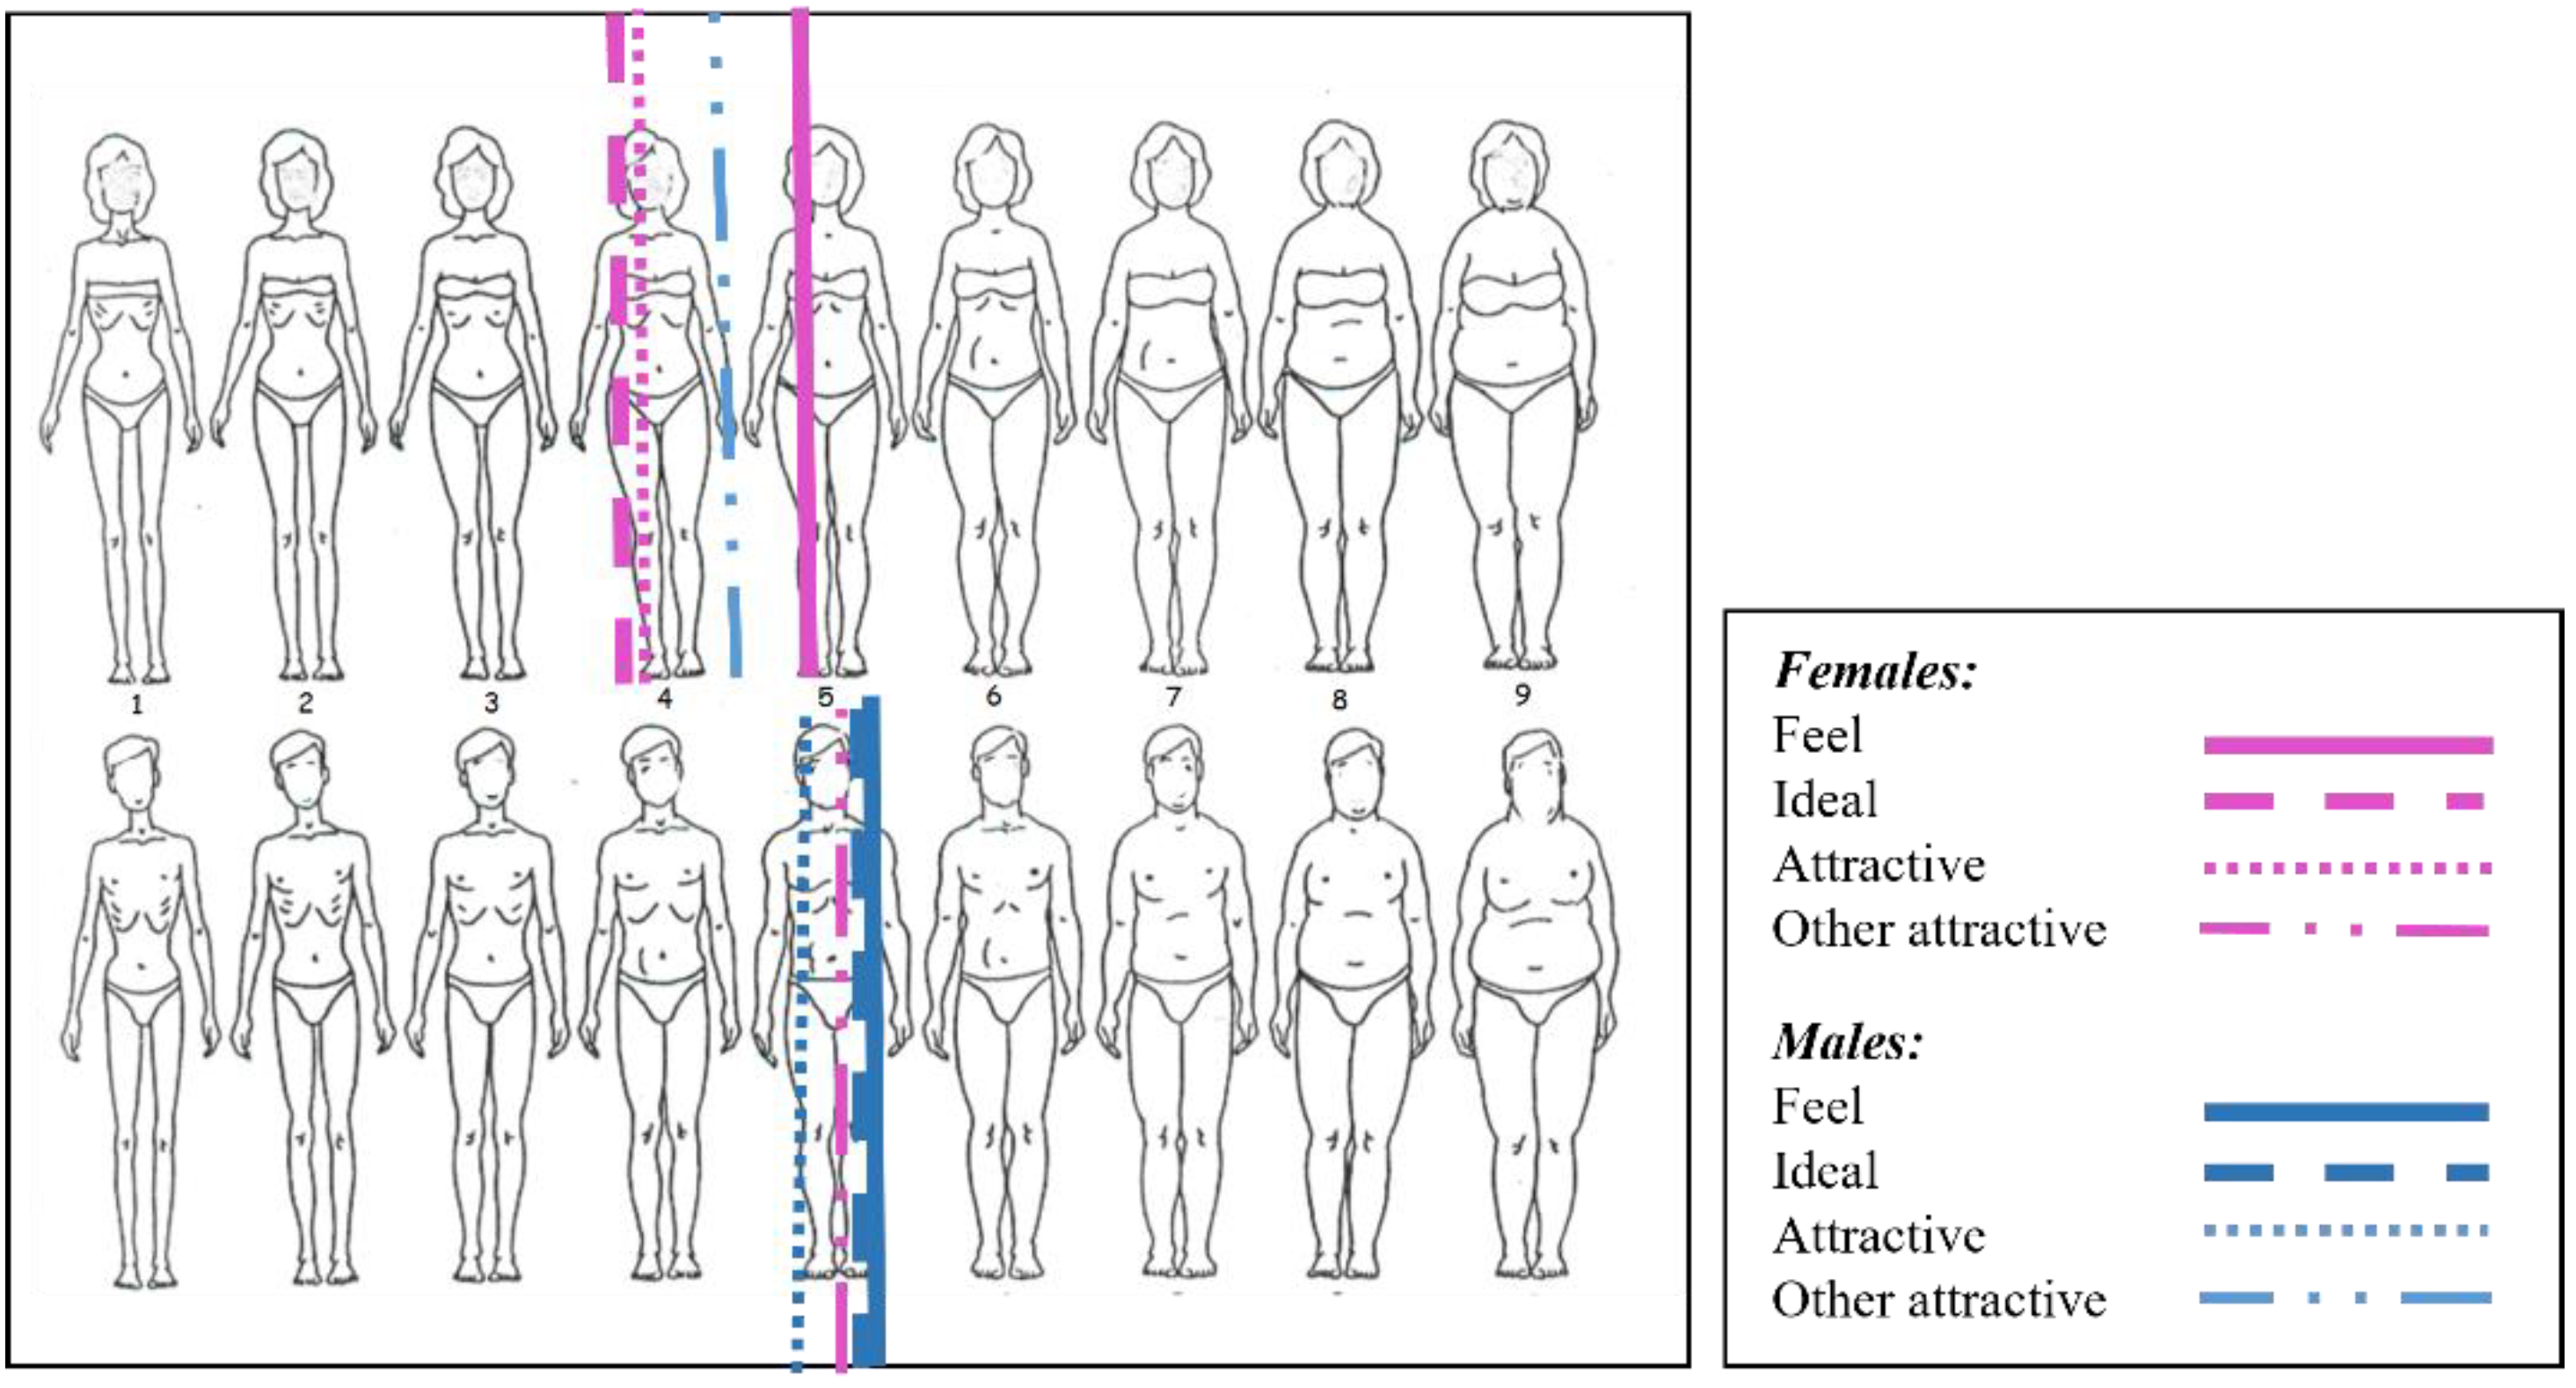 Man silhouette, Female body shape Human body Silhouette, female, animals,  hand, human png